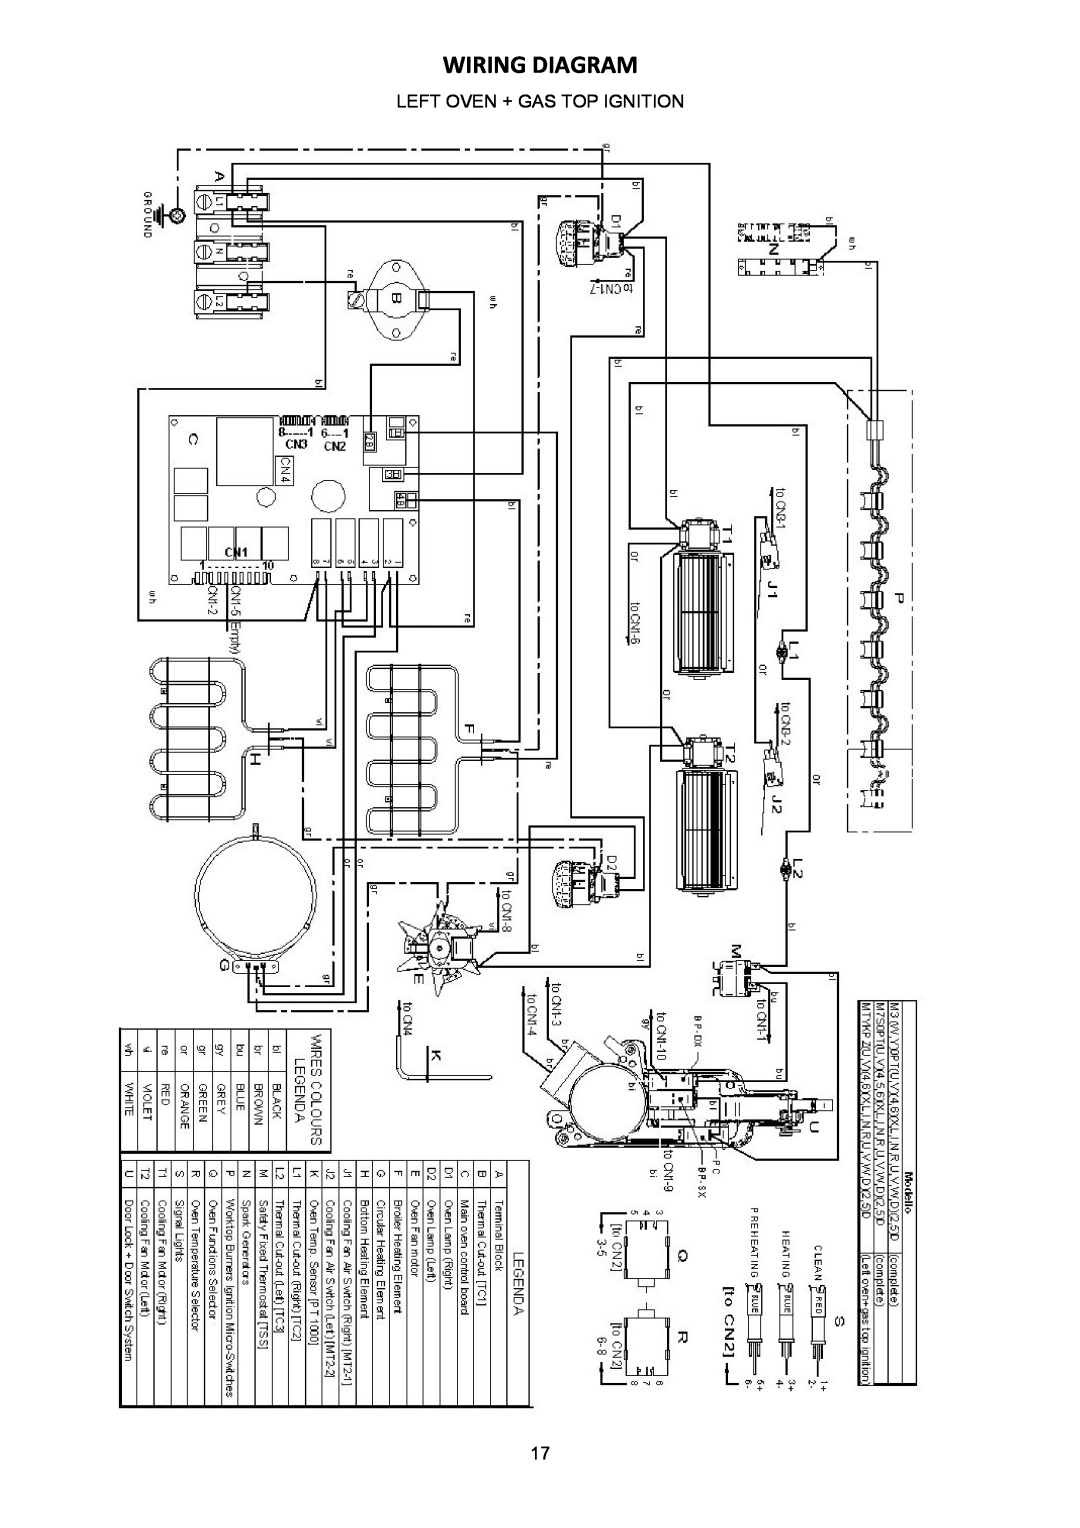 Bertazzoni X)486GPIRCR, X)486GPIRX, X)486GPIRVI, X)486GPIRBI, X)486GPIRVE, (A Wiring Diagram, Left Oven + Gas Top Ignition 